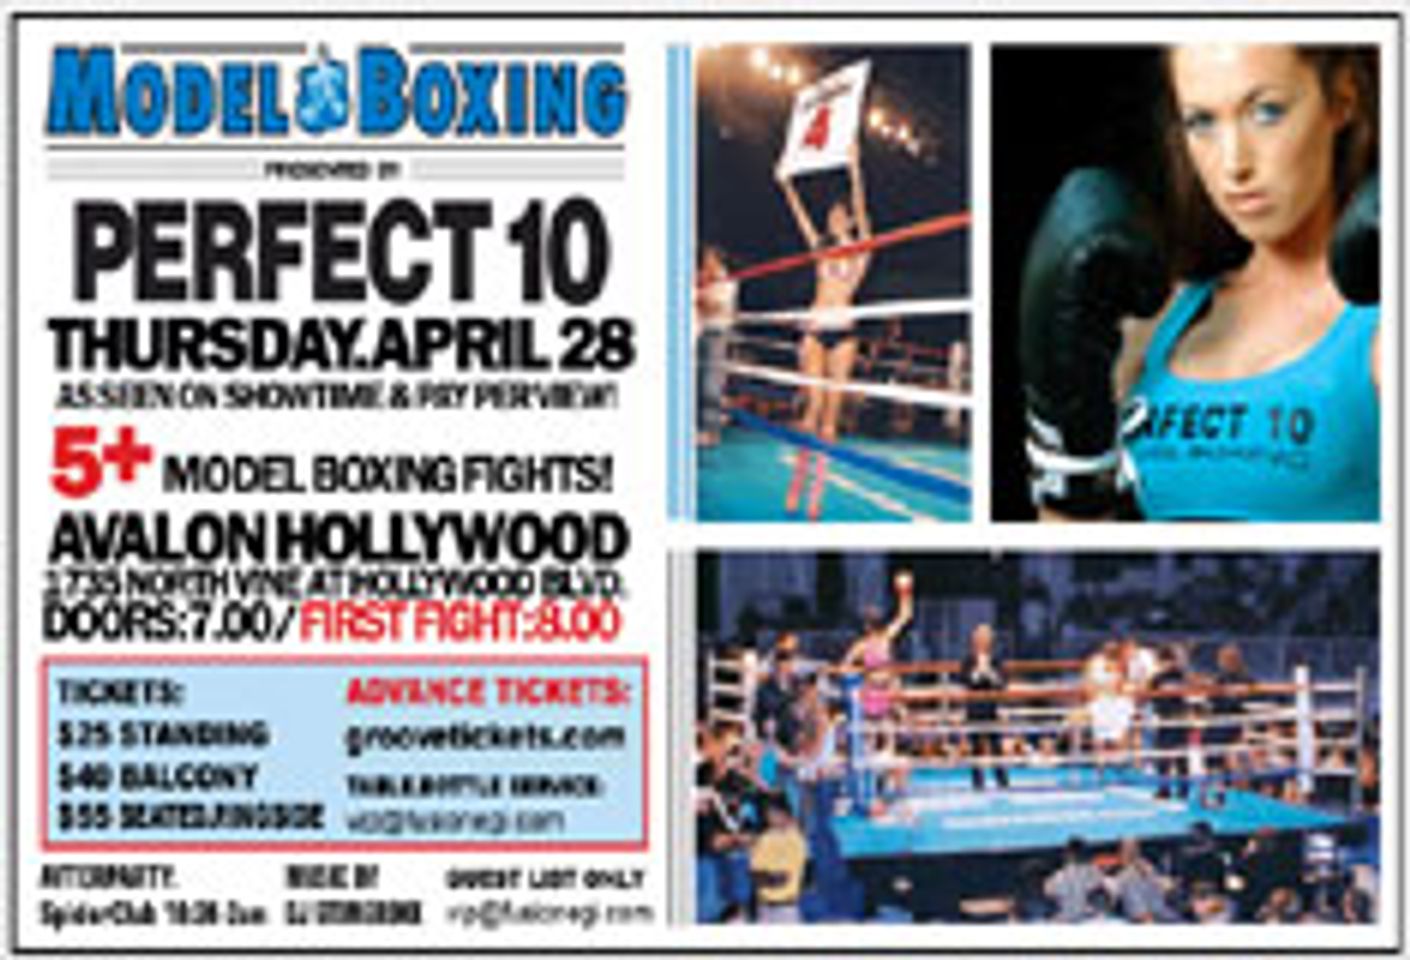 Perfect 10 Model Boxing Returns